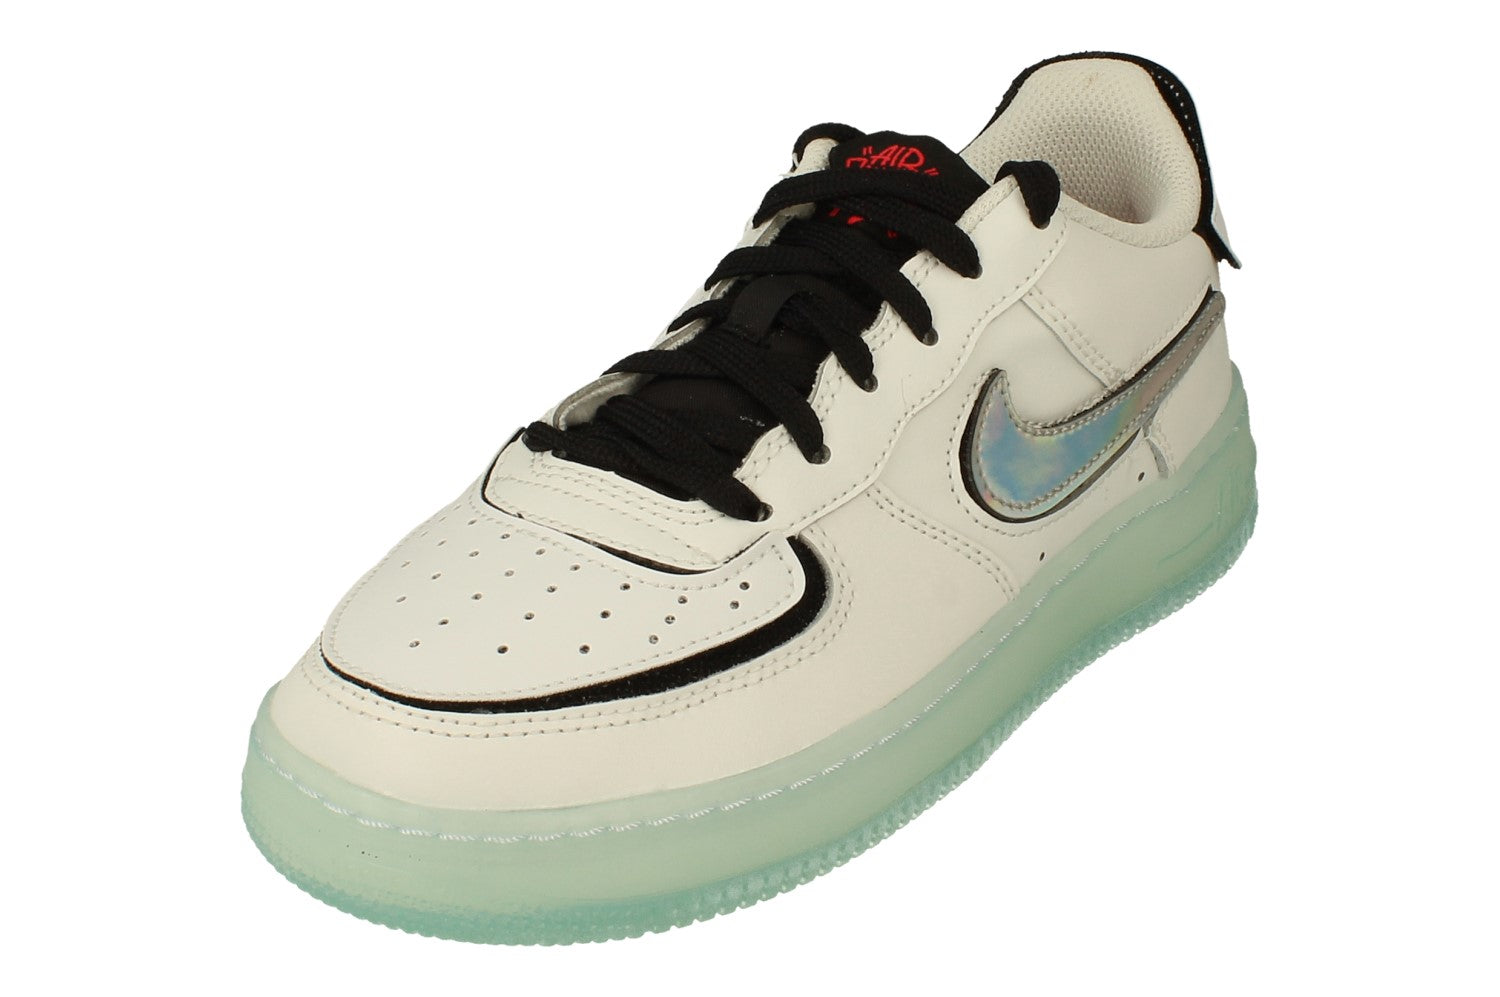  Nike Air Force 1 Low Utility Mens Trainers FJ1533 Sneakers  Shoes (UK 5 US 5.5 EU 38, Light British tan 200)